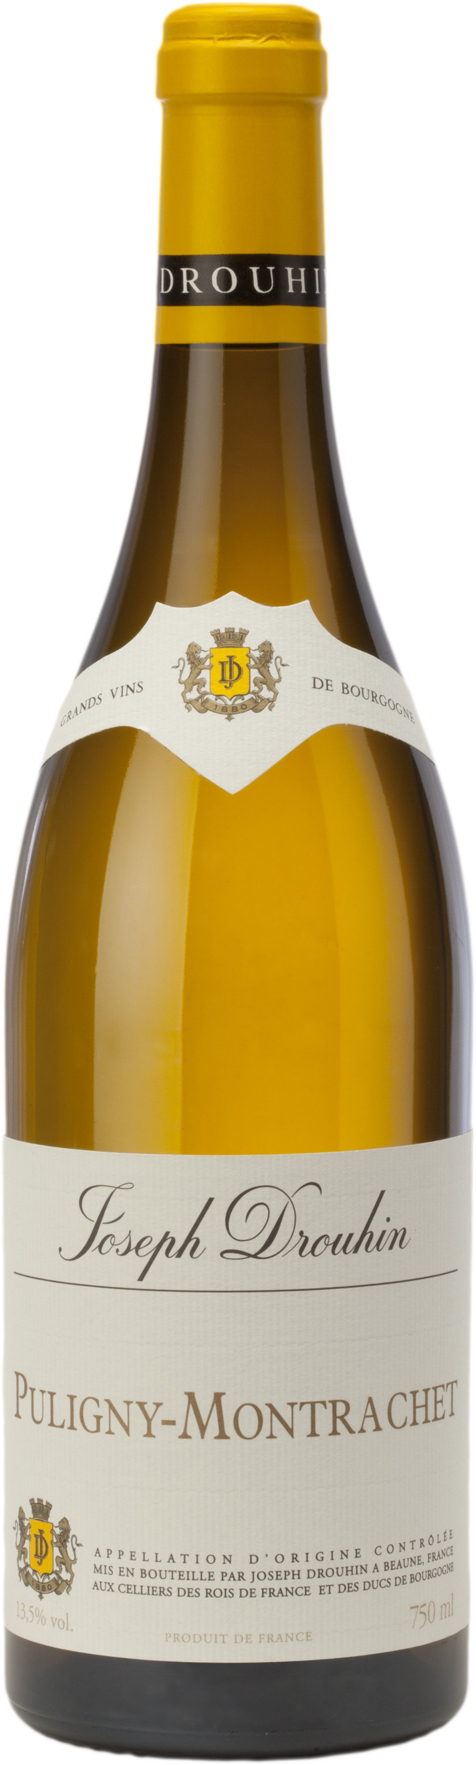 Puligny montrachet 2016 Domaine Joseph DROUHIN, Bourgogne blanc